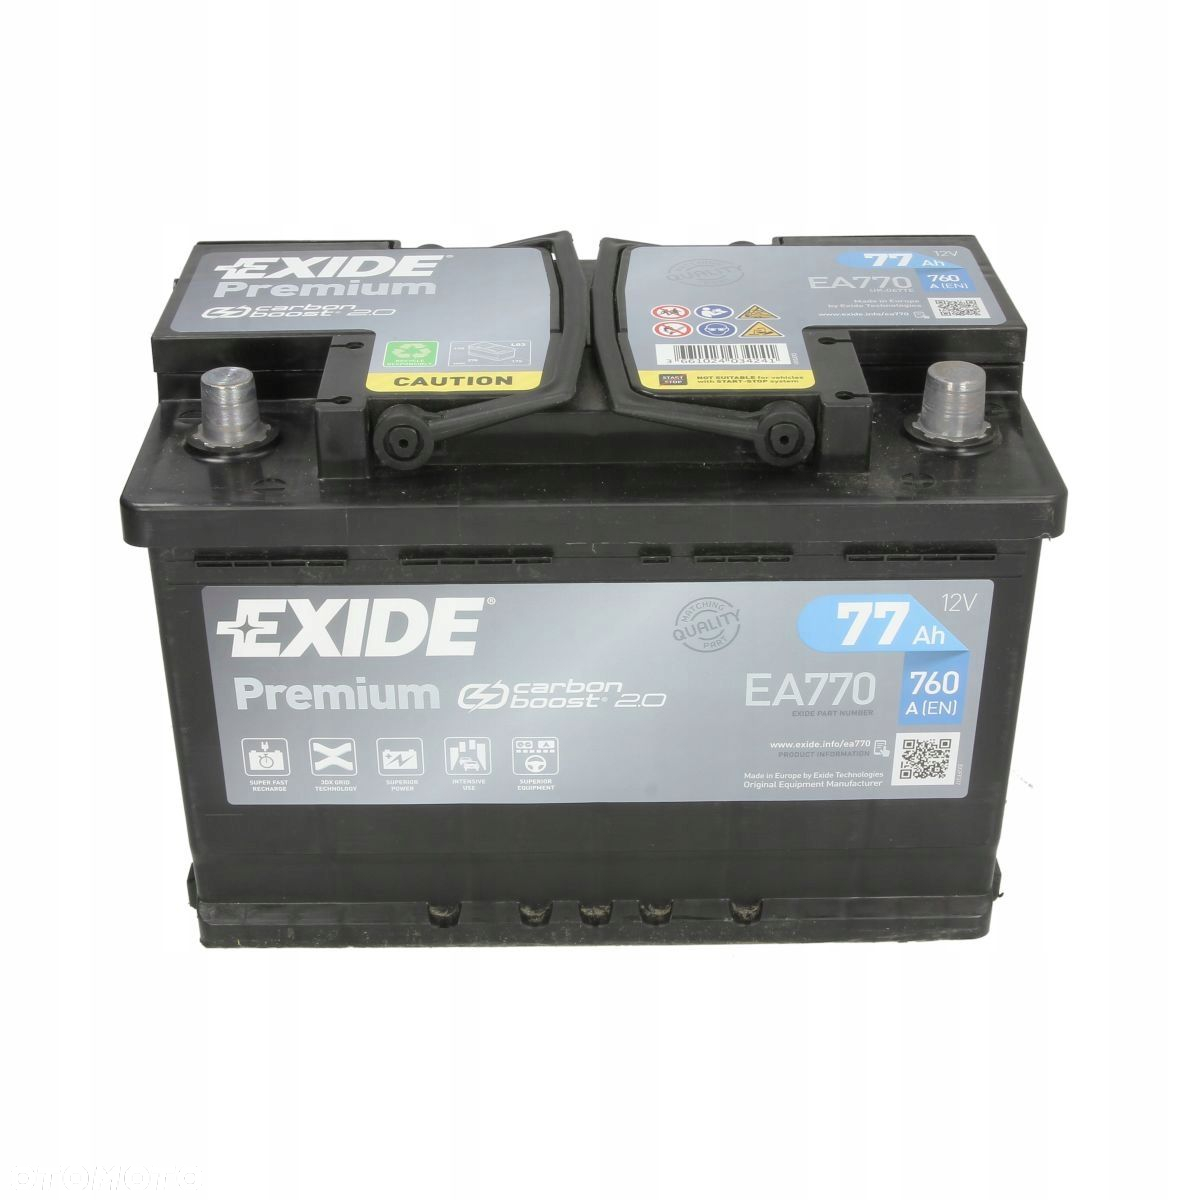 Akumulator Exide Premium 12V 77Ah 760A P+ EA770 MOŻLIWY DOWÓZ MONTAŻ - 2